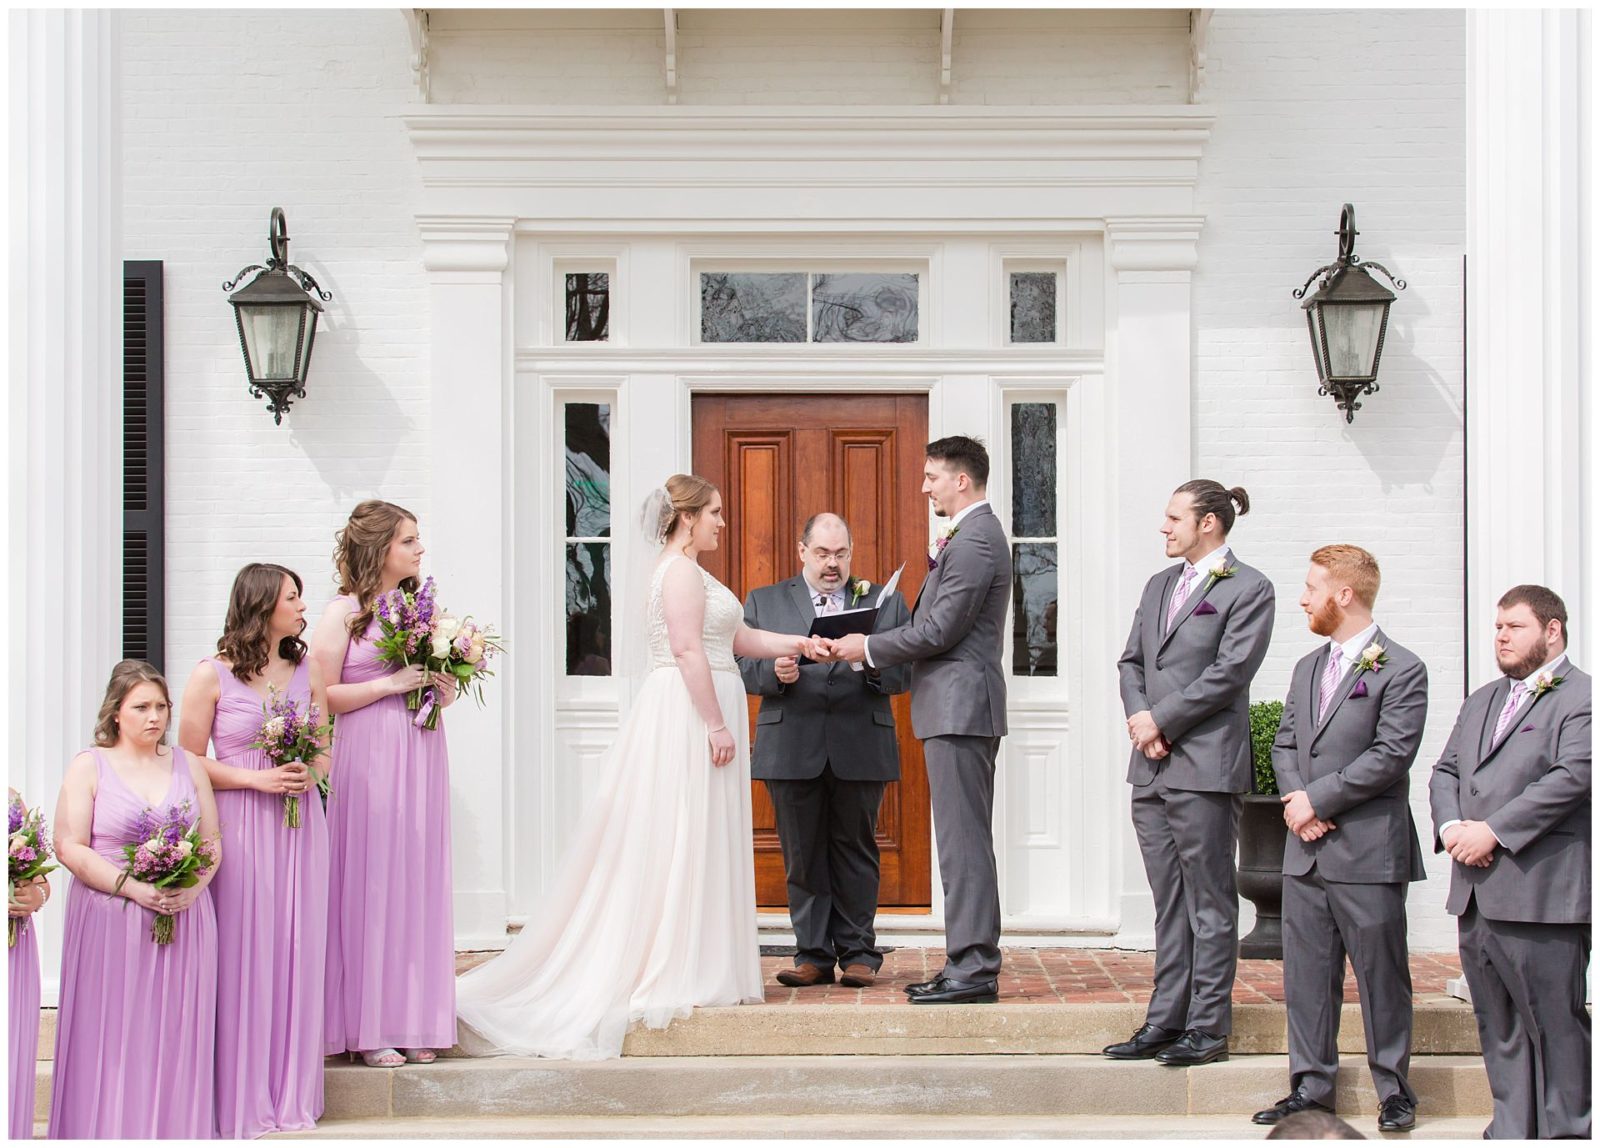 Wedding Ceremony Photos at Ashford Acres Inn in Cynthiana, Kentucky.